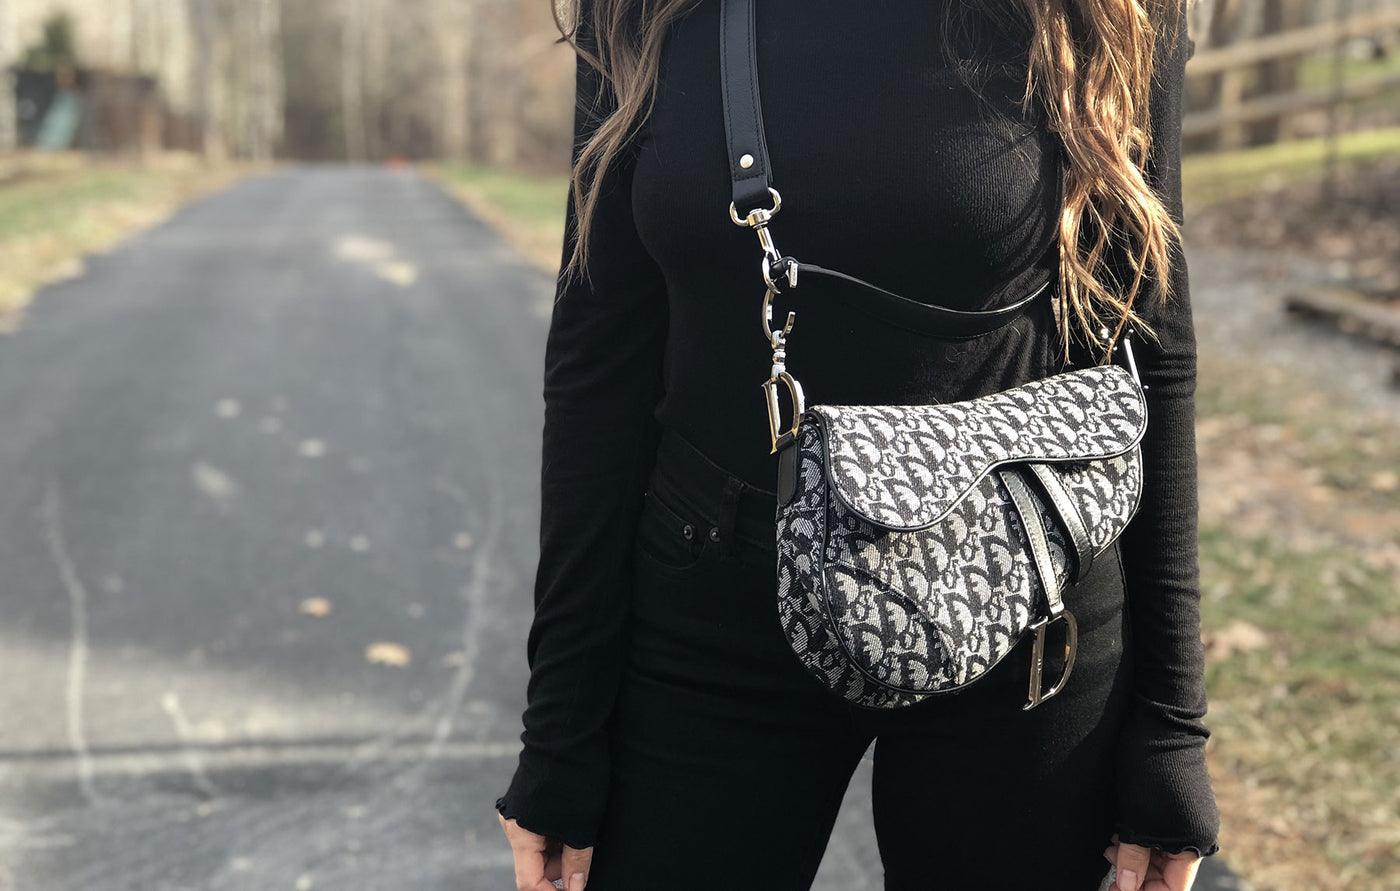 Photo of leather cross body strap on a woman's designer handbag.